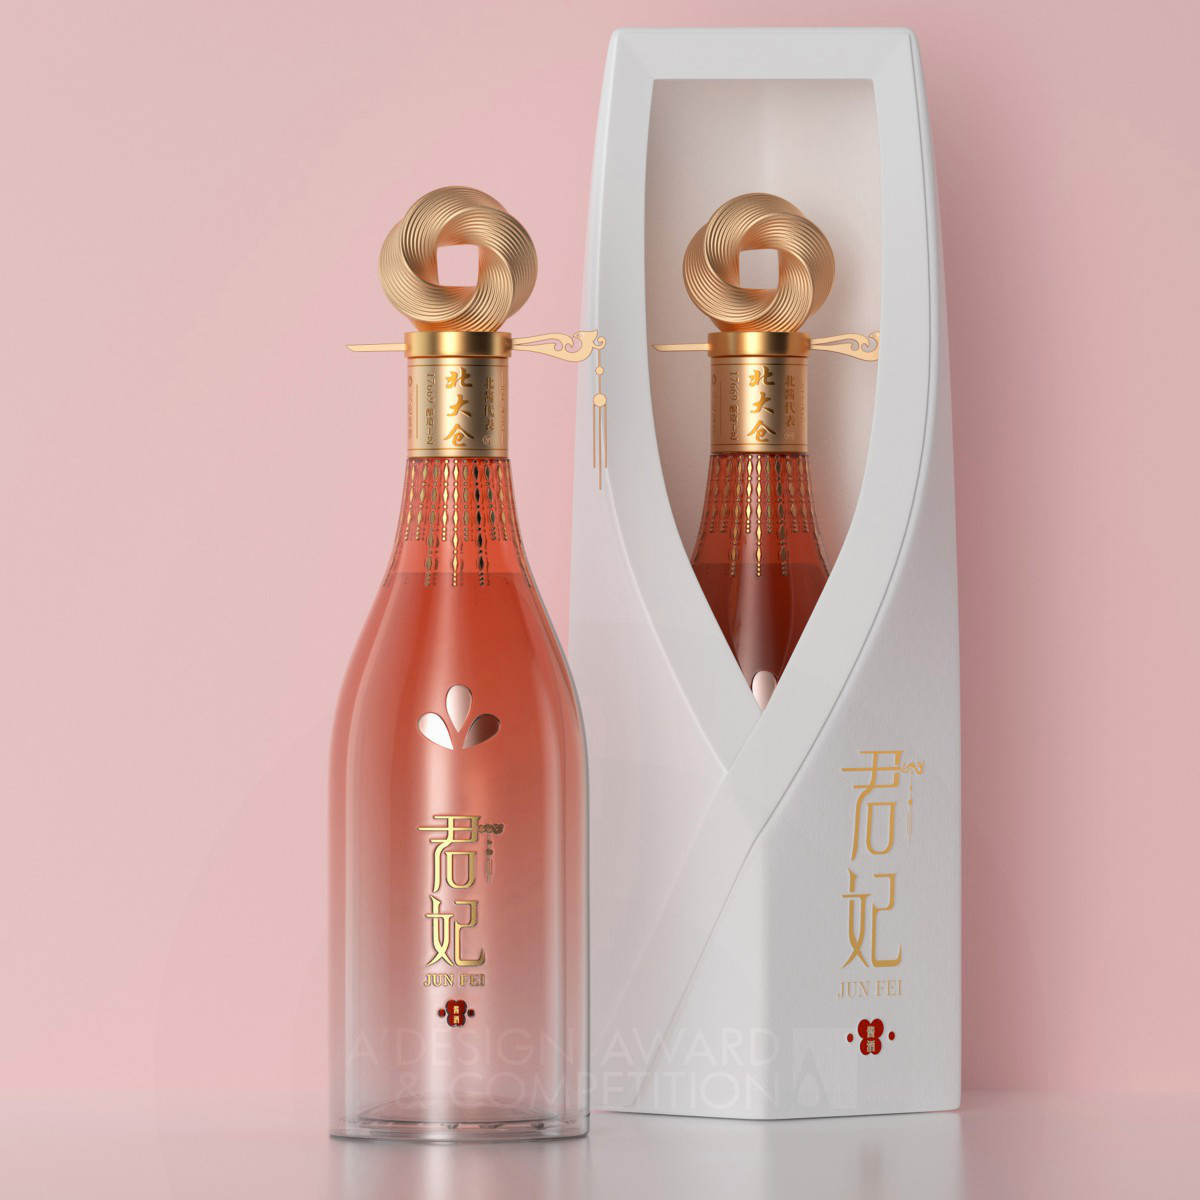 Beidacang Junfei Wine <b>Liquor Packaging